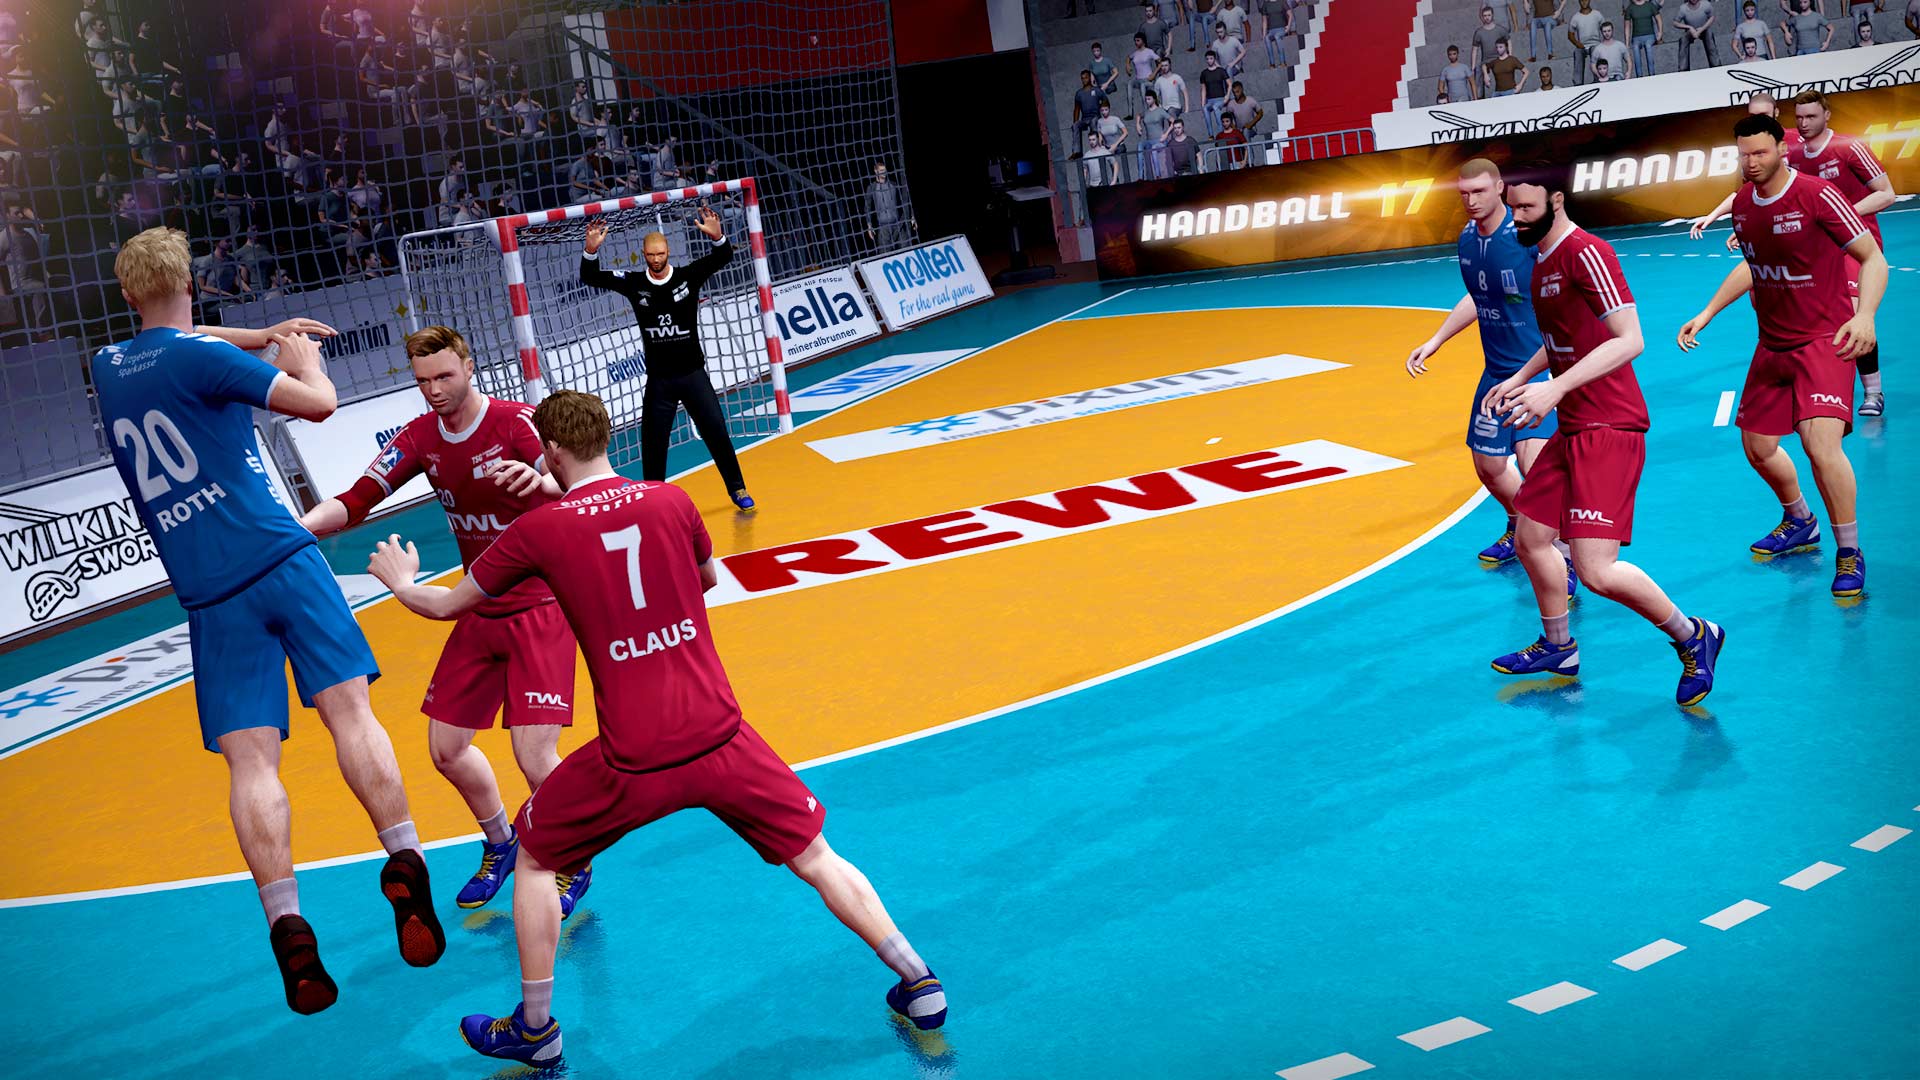 Handball 17 on PS4 | Official PlayStation™Store US